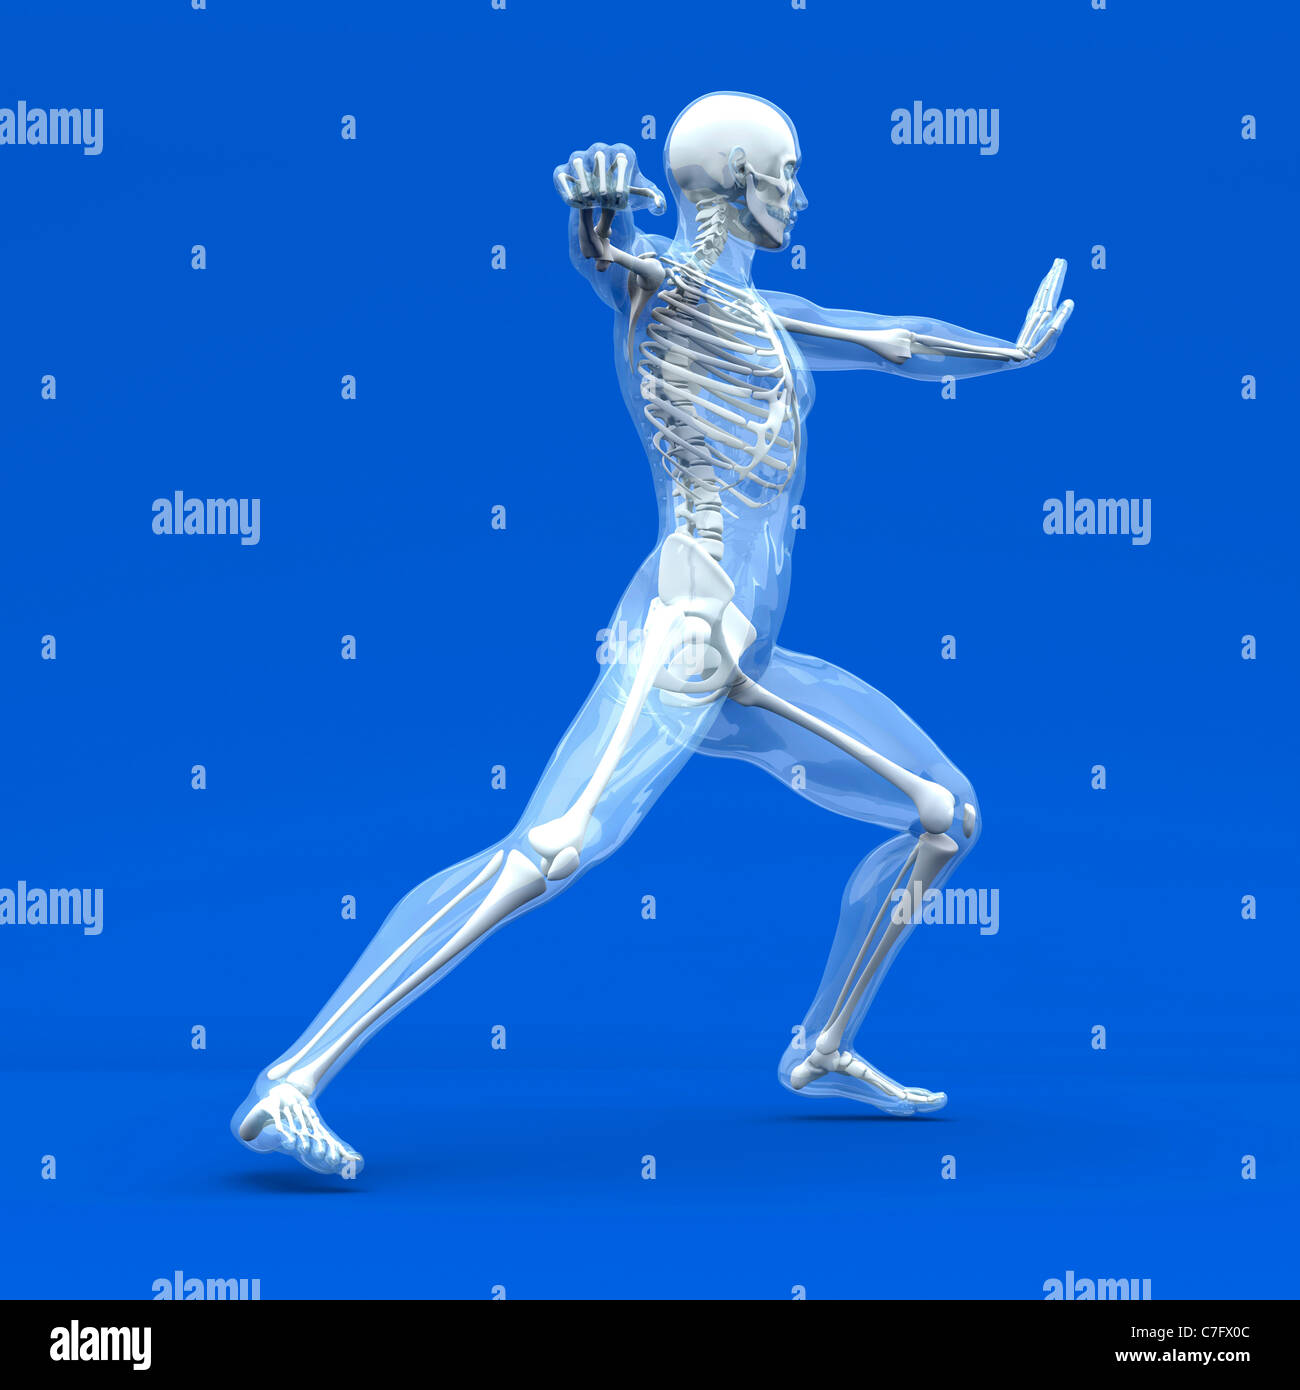 Anatomy - Martial arts Stock Photo - Alamy